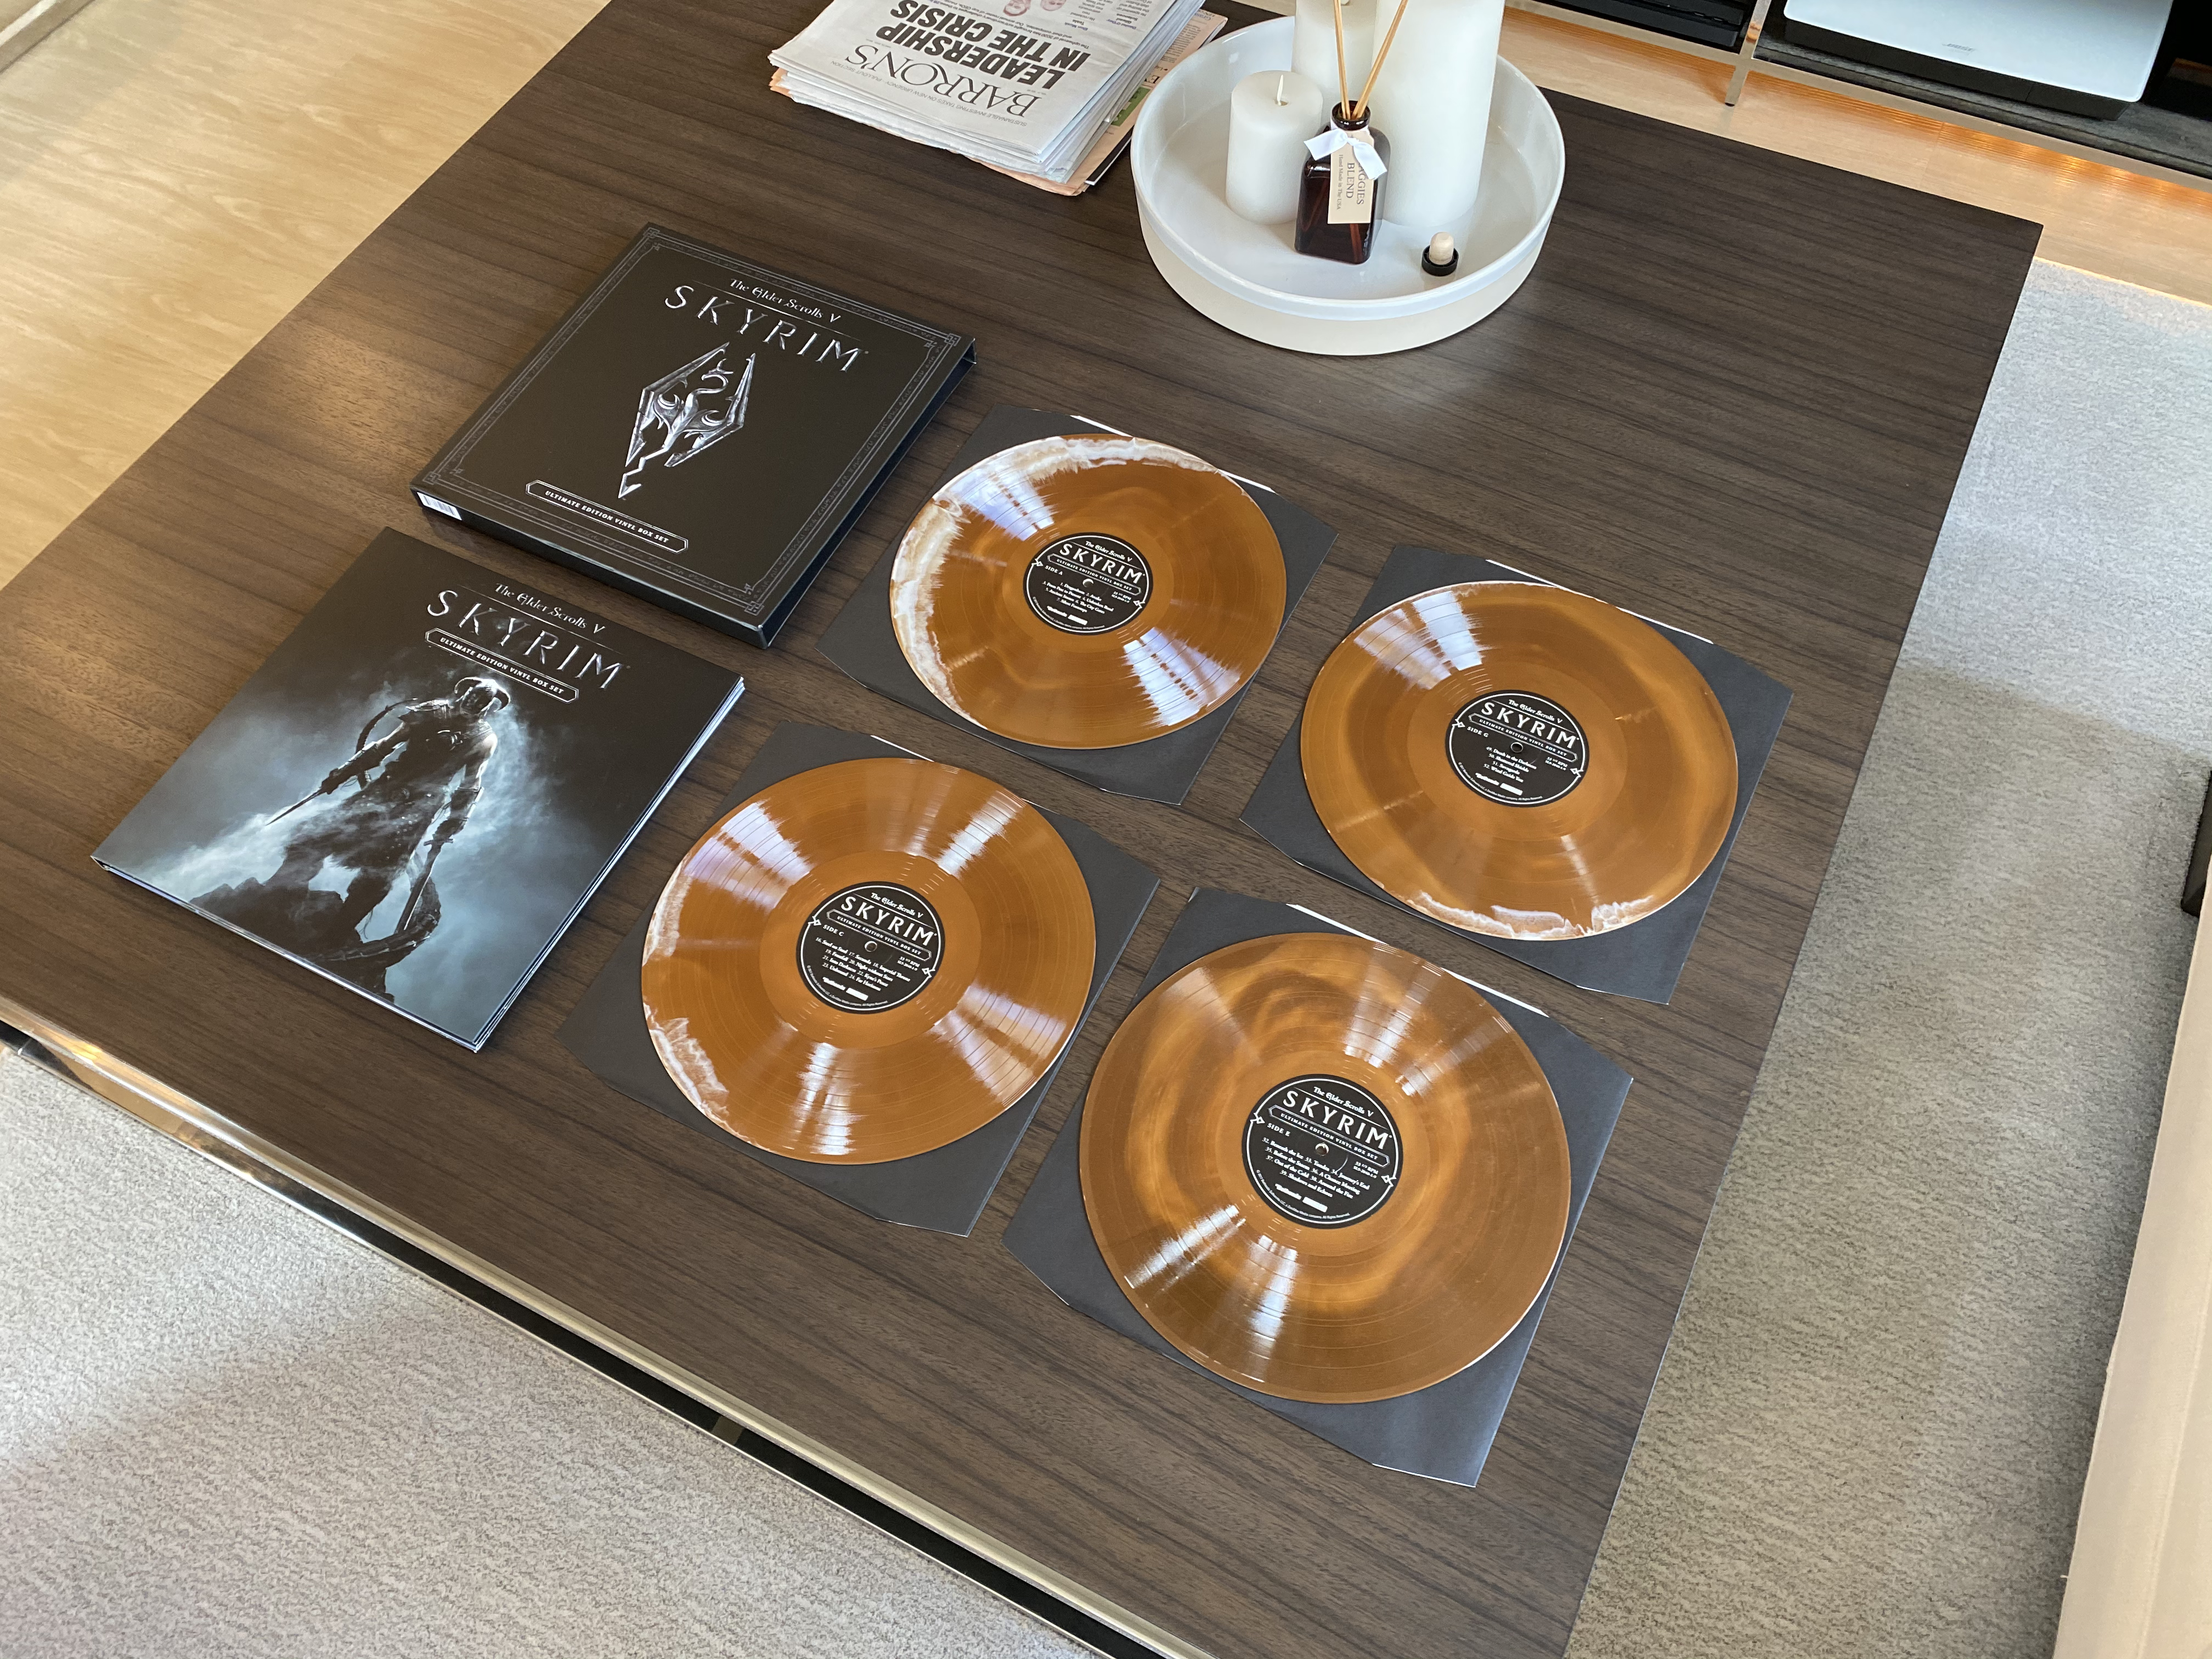 The Scrolls Skyrim "Ultimate Vinyl Edition" 4 LP Box Set "Sweet Roll" Variant by SpaceLab9 -